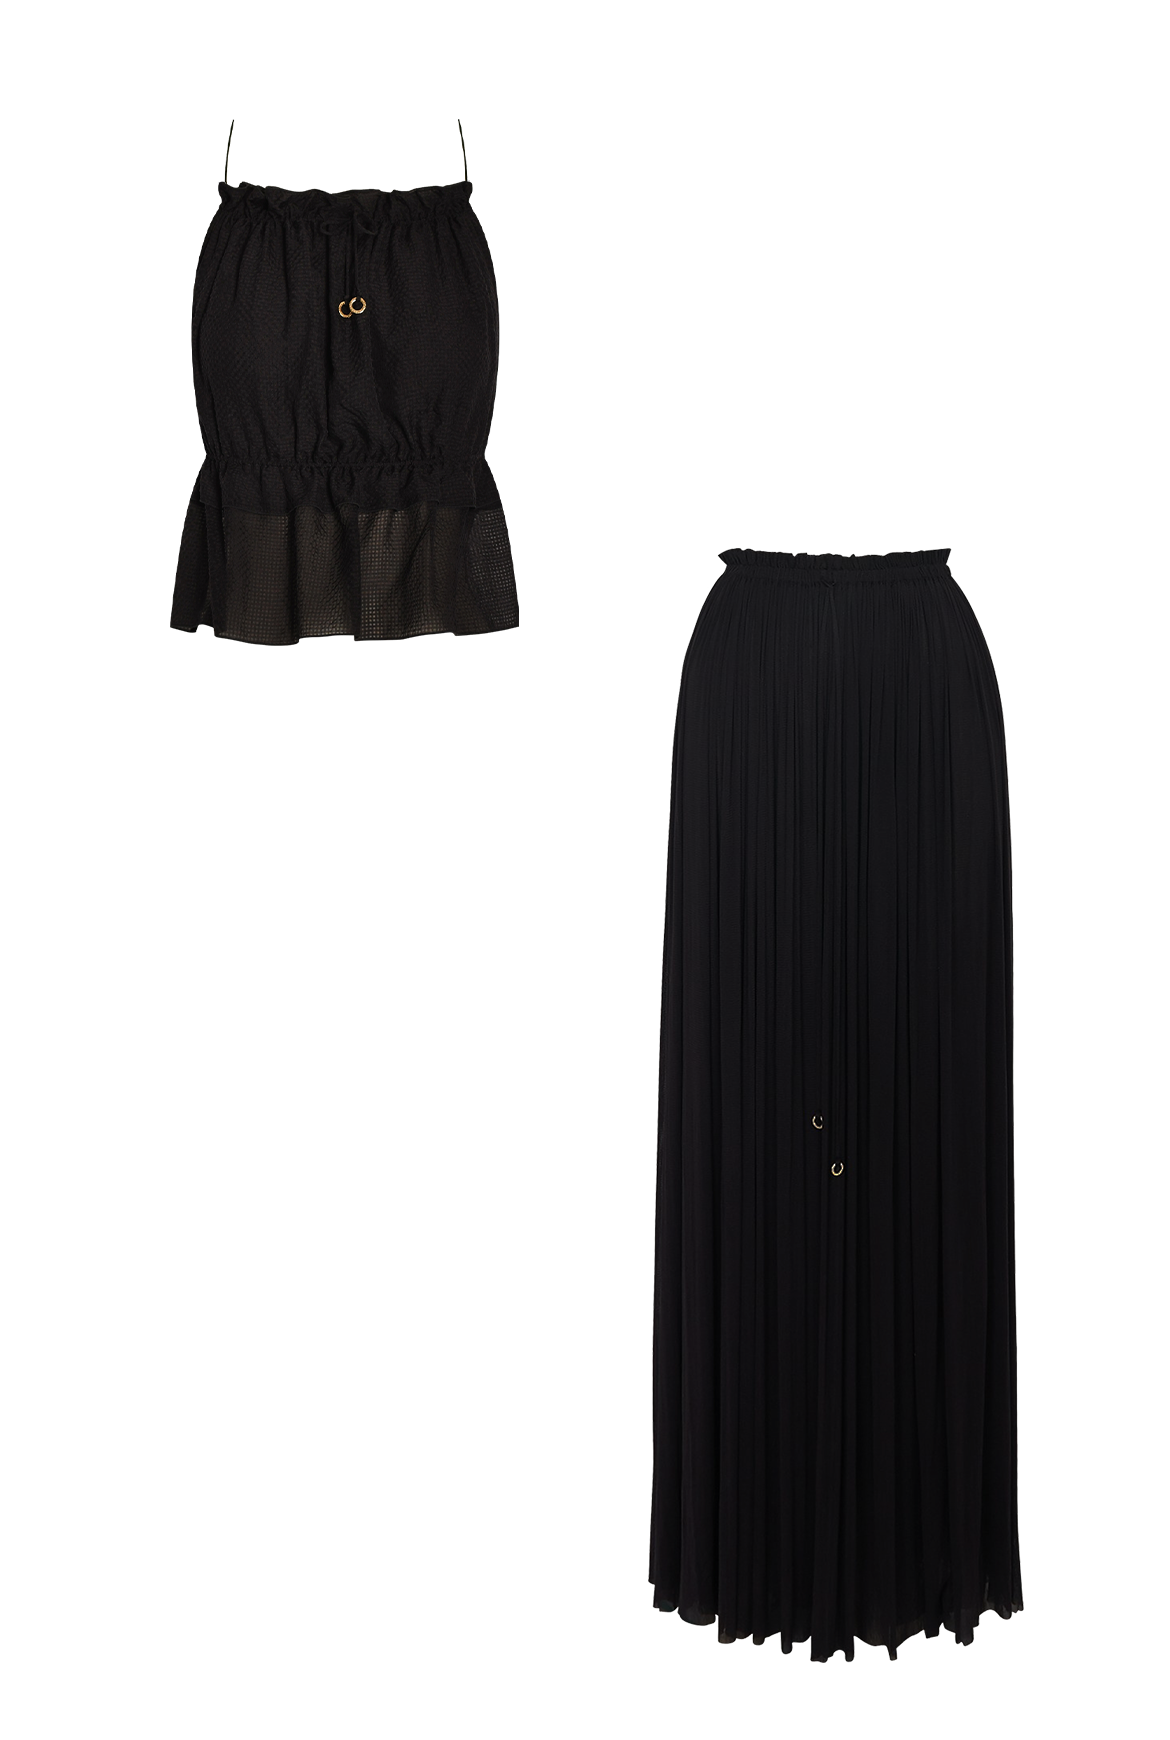 Black Silk Skirt & String Top